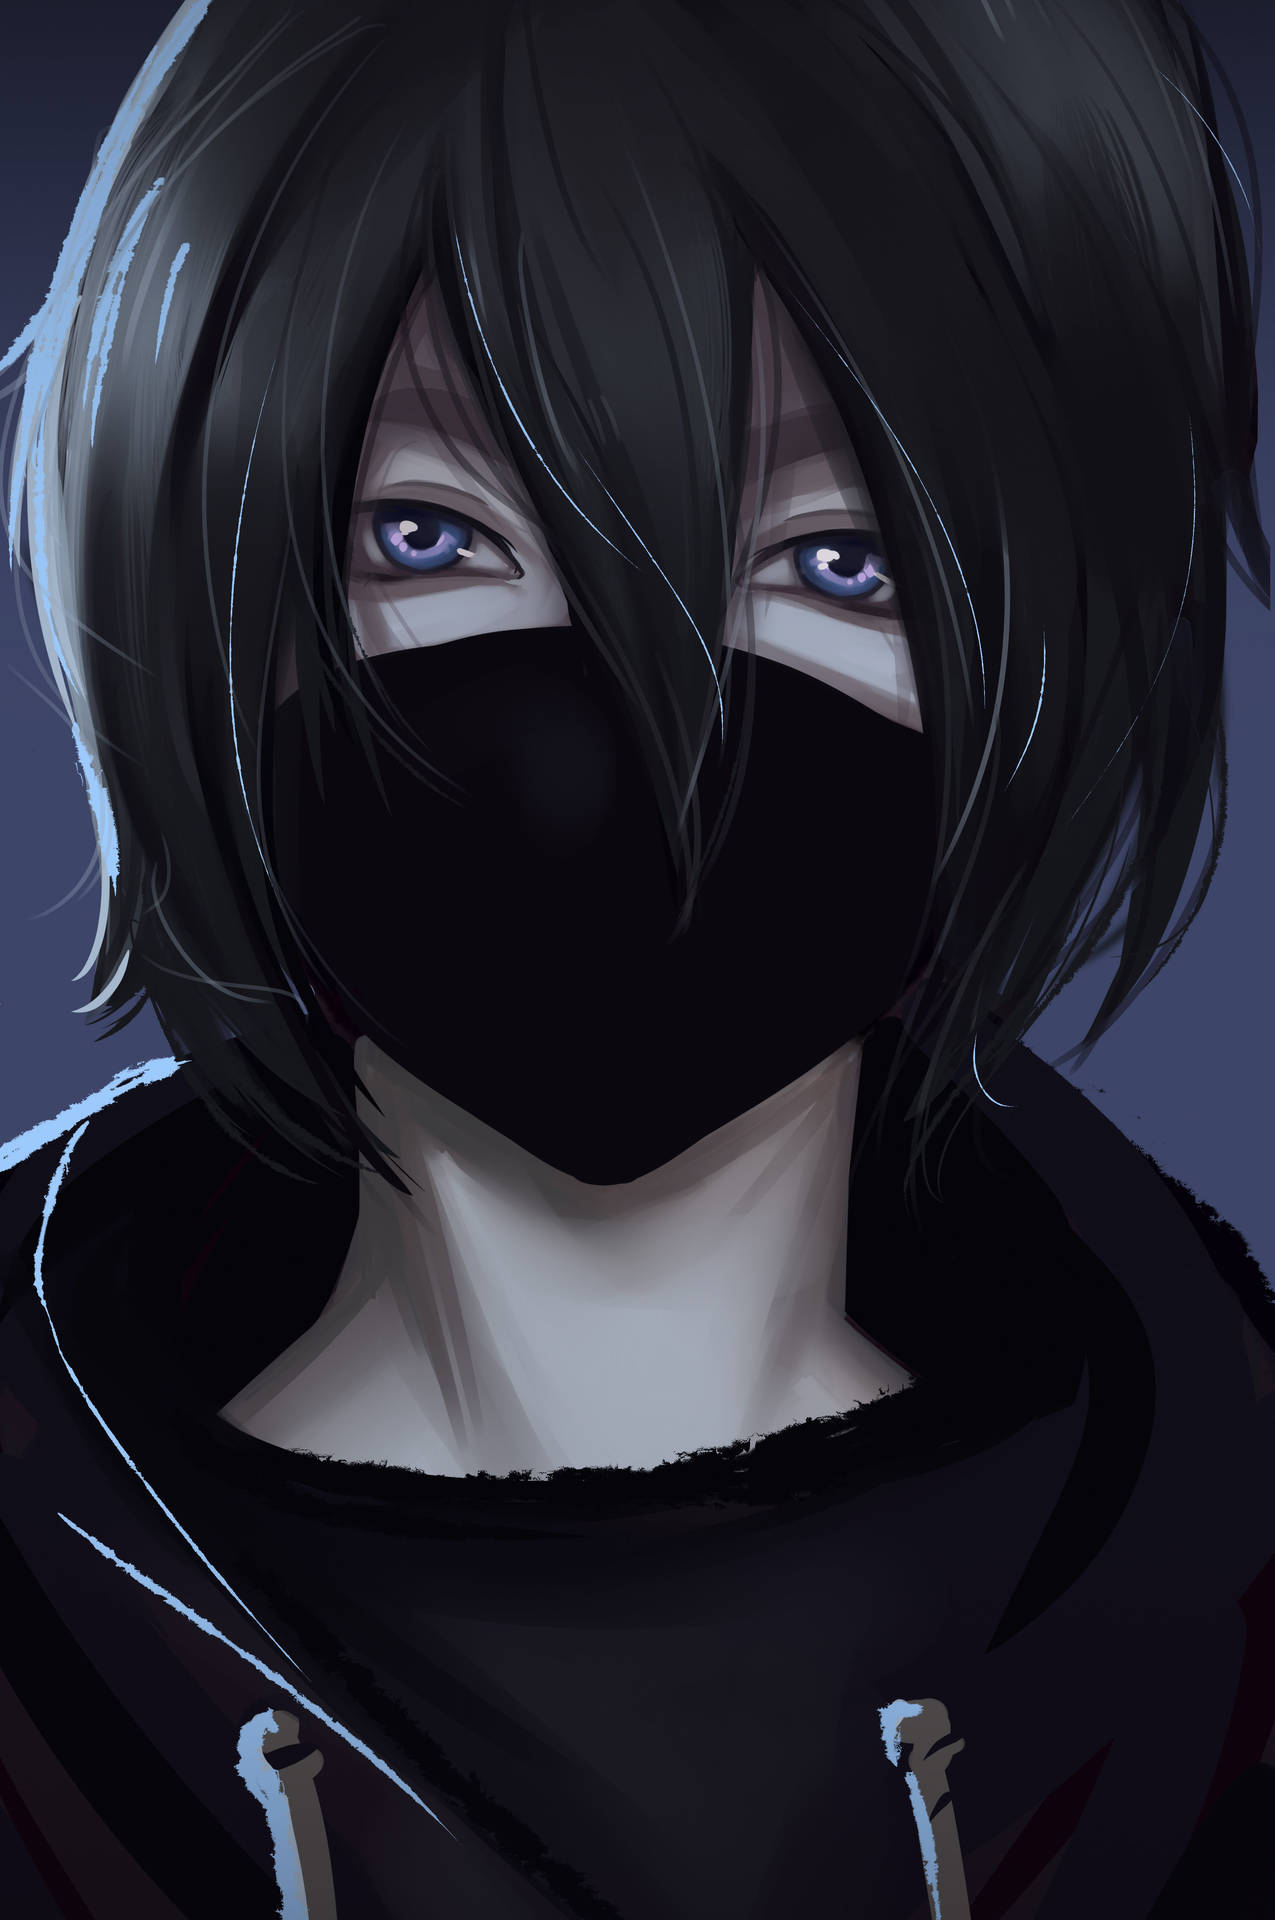 Aesthetic Anime Boy Icon Black Mask Wallpaper